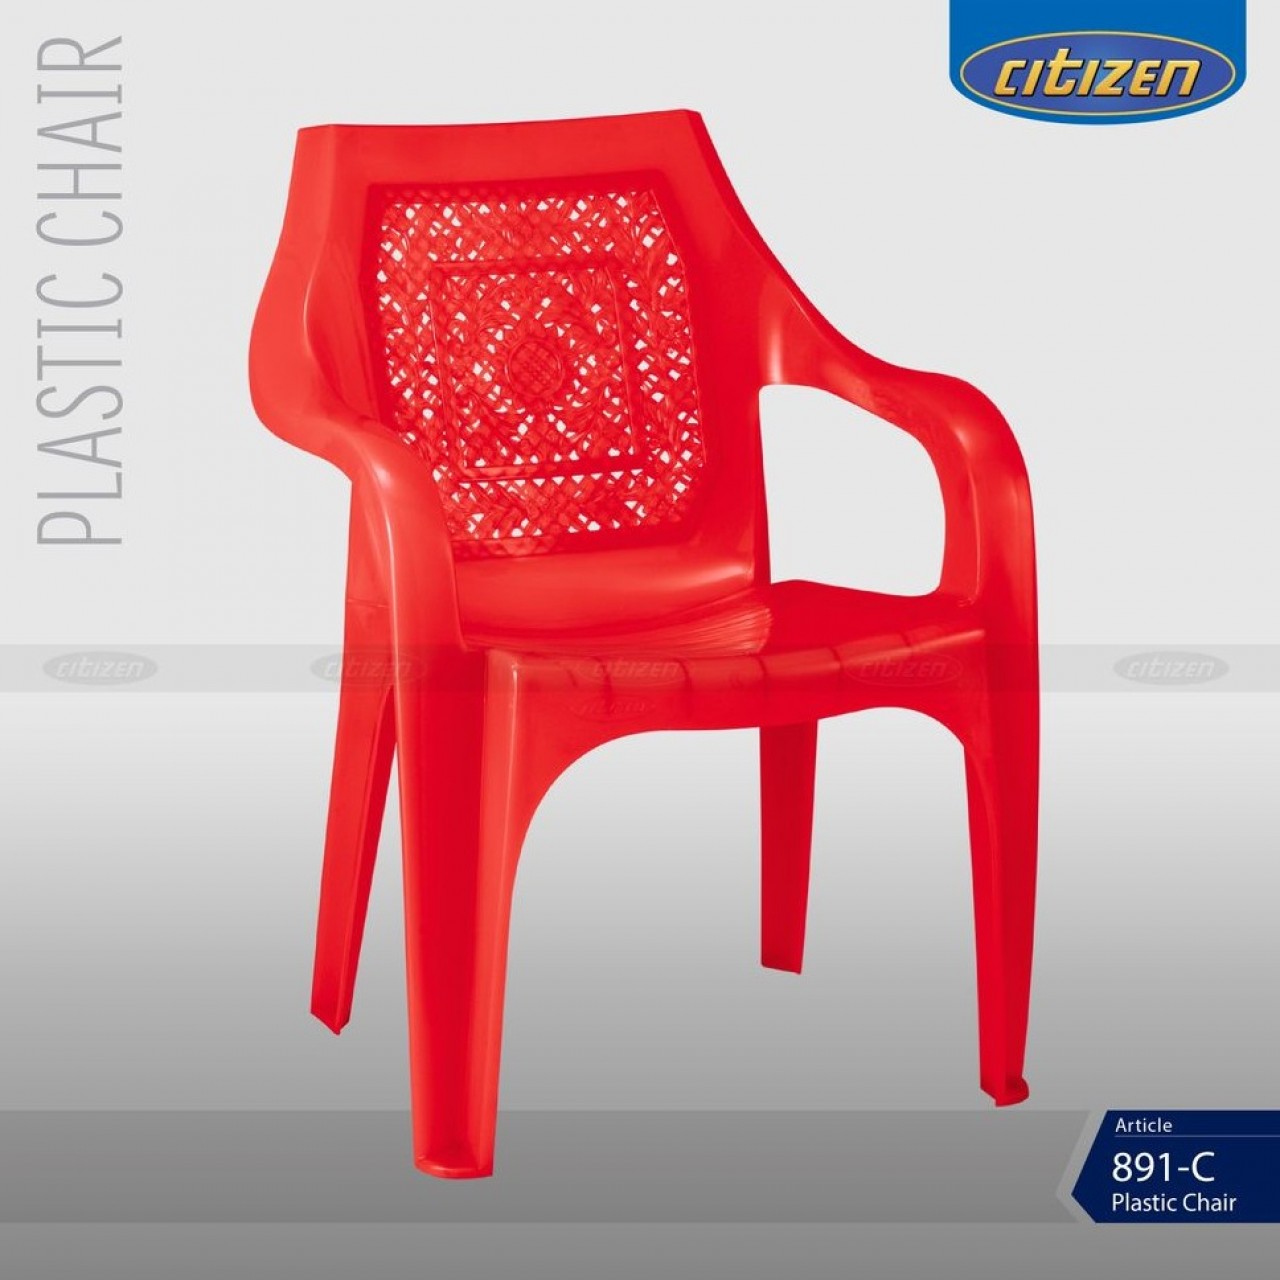 Citizen 891-C Plastic Crystal & Regular Chair